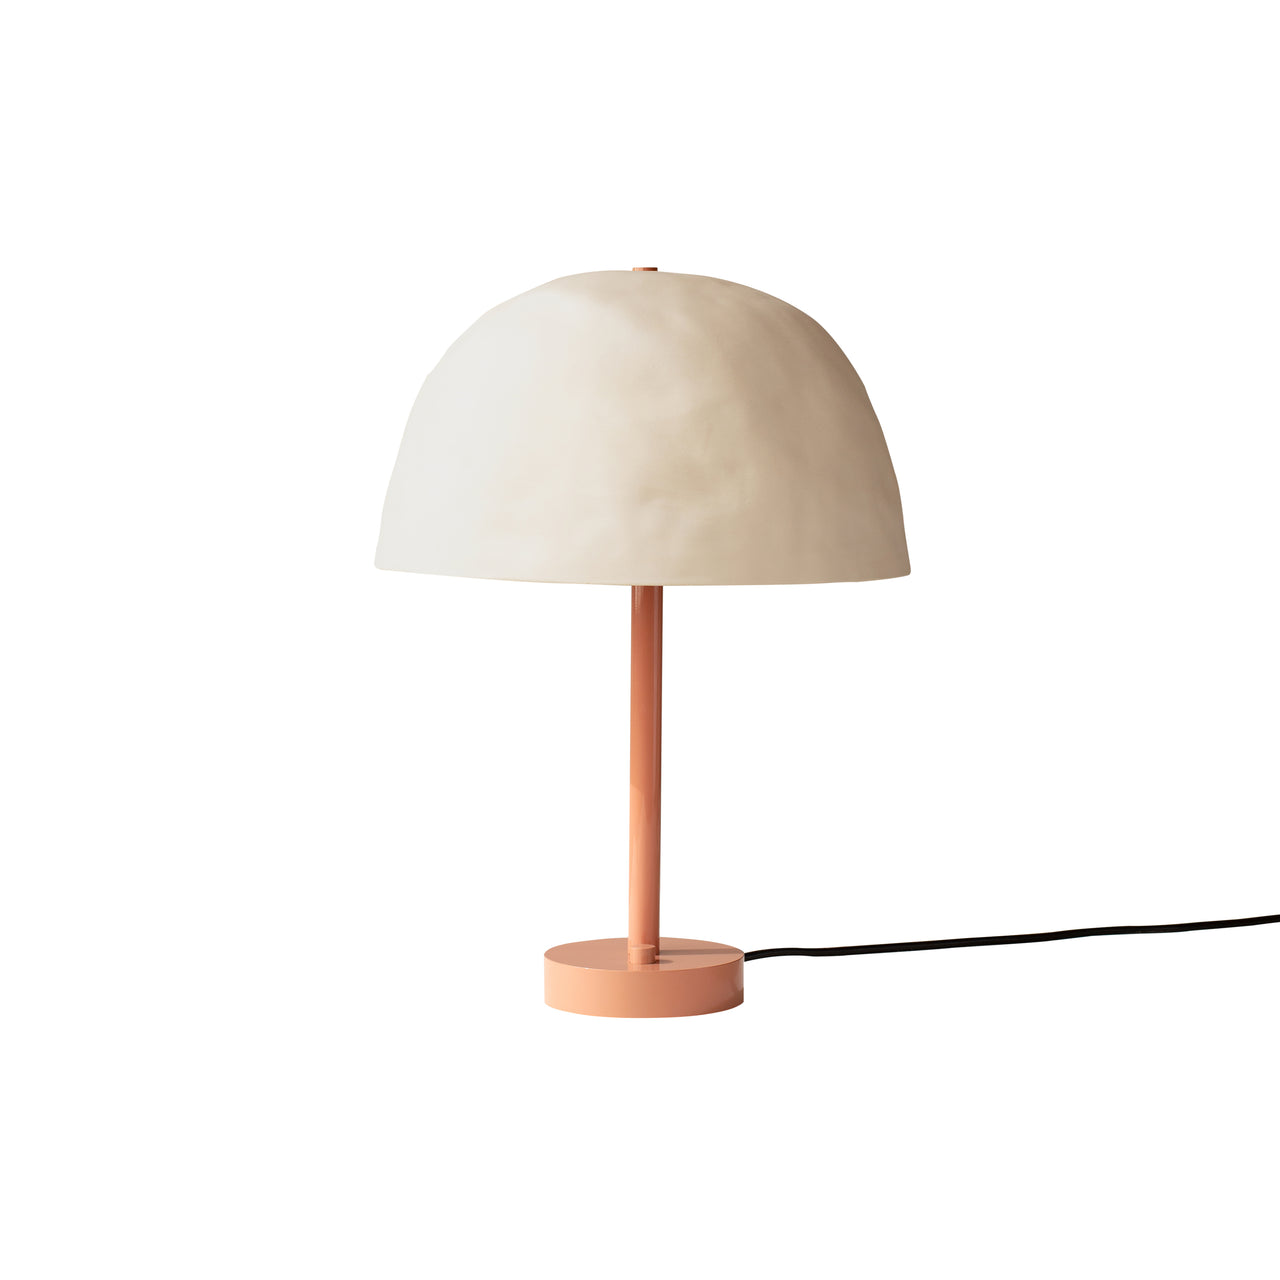 Dome Table Lamp: White Clay + Peach